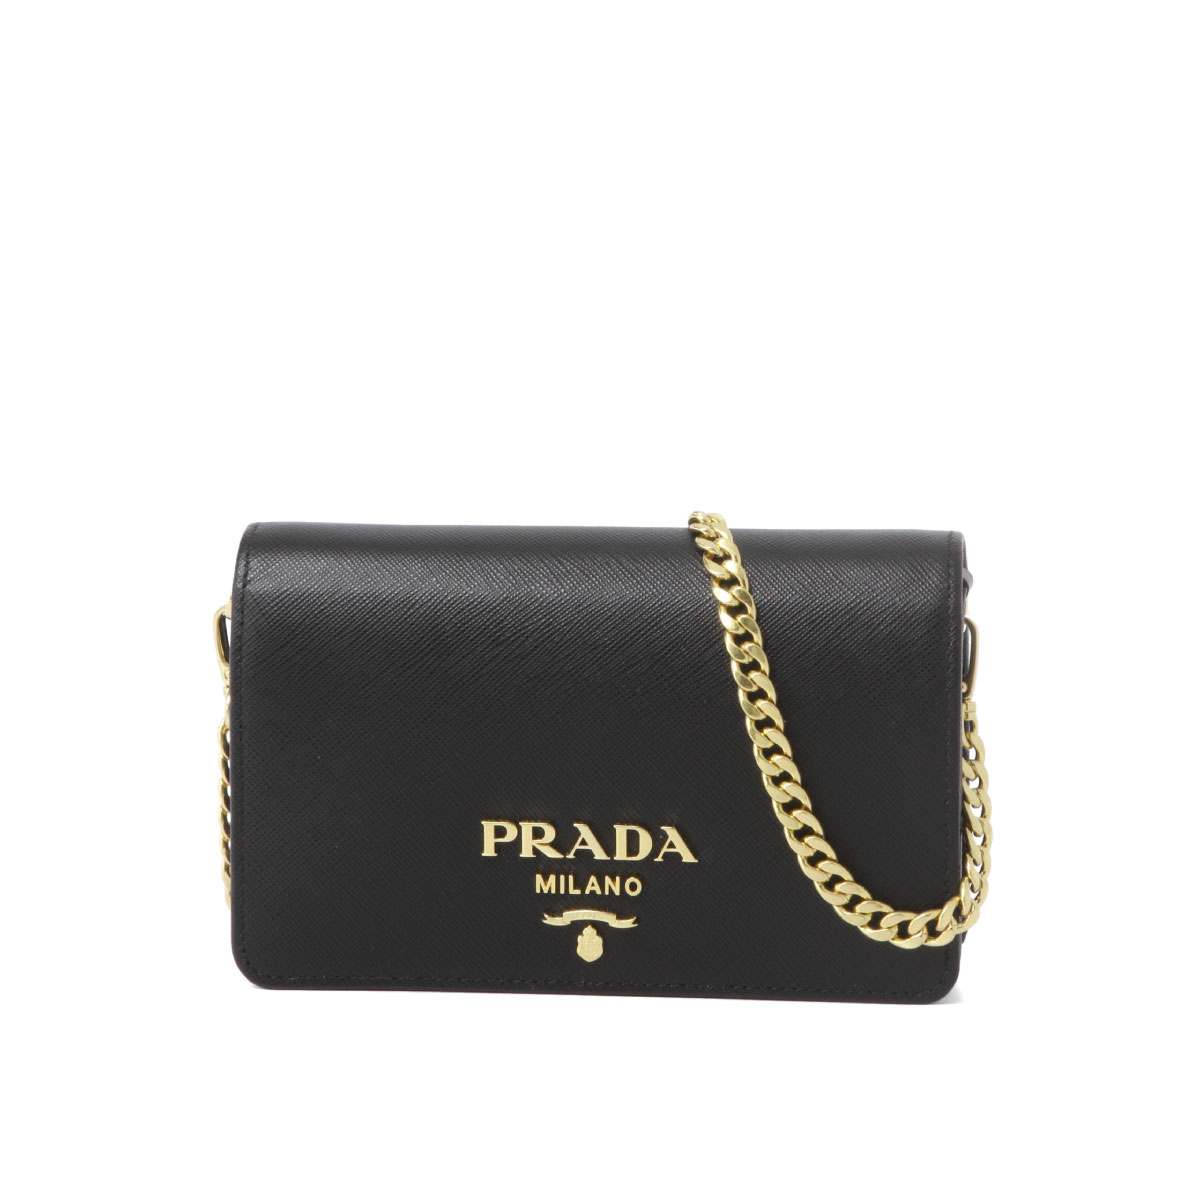 Importshopdouble Prada Prada Bag Lady 1bp006 Nzv F0002 Shoulder